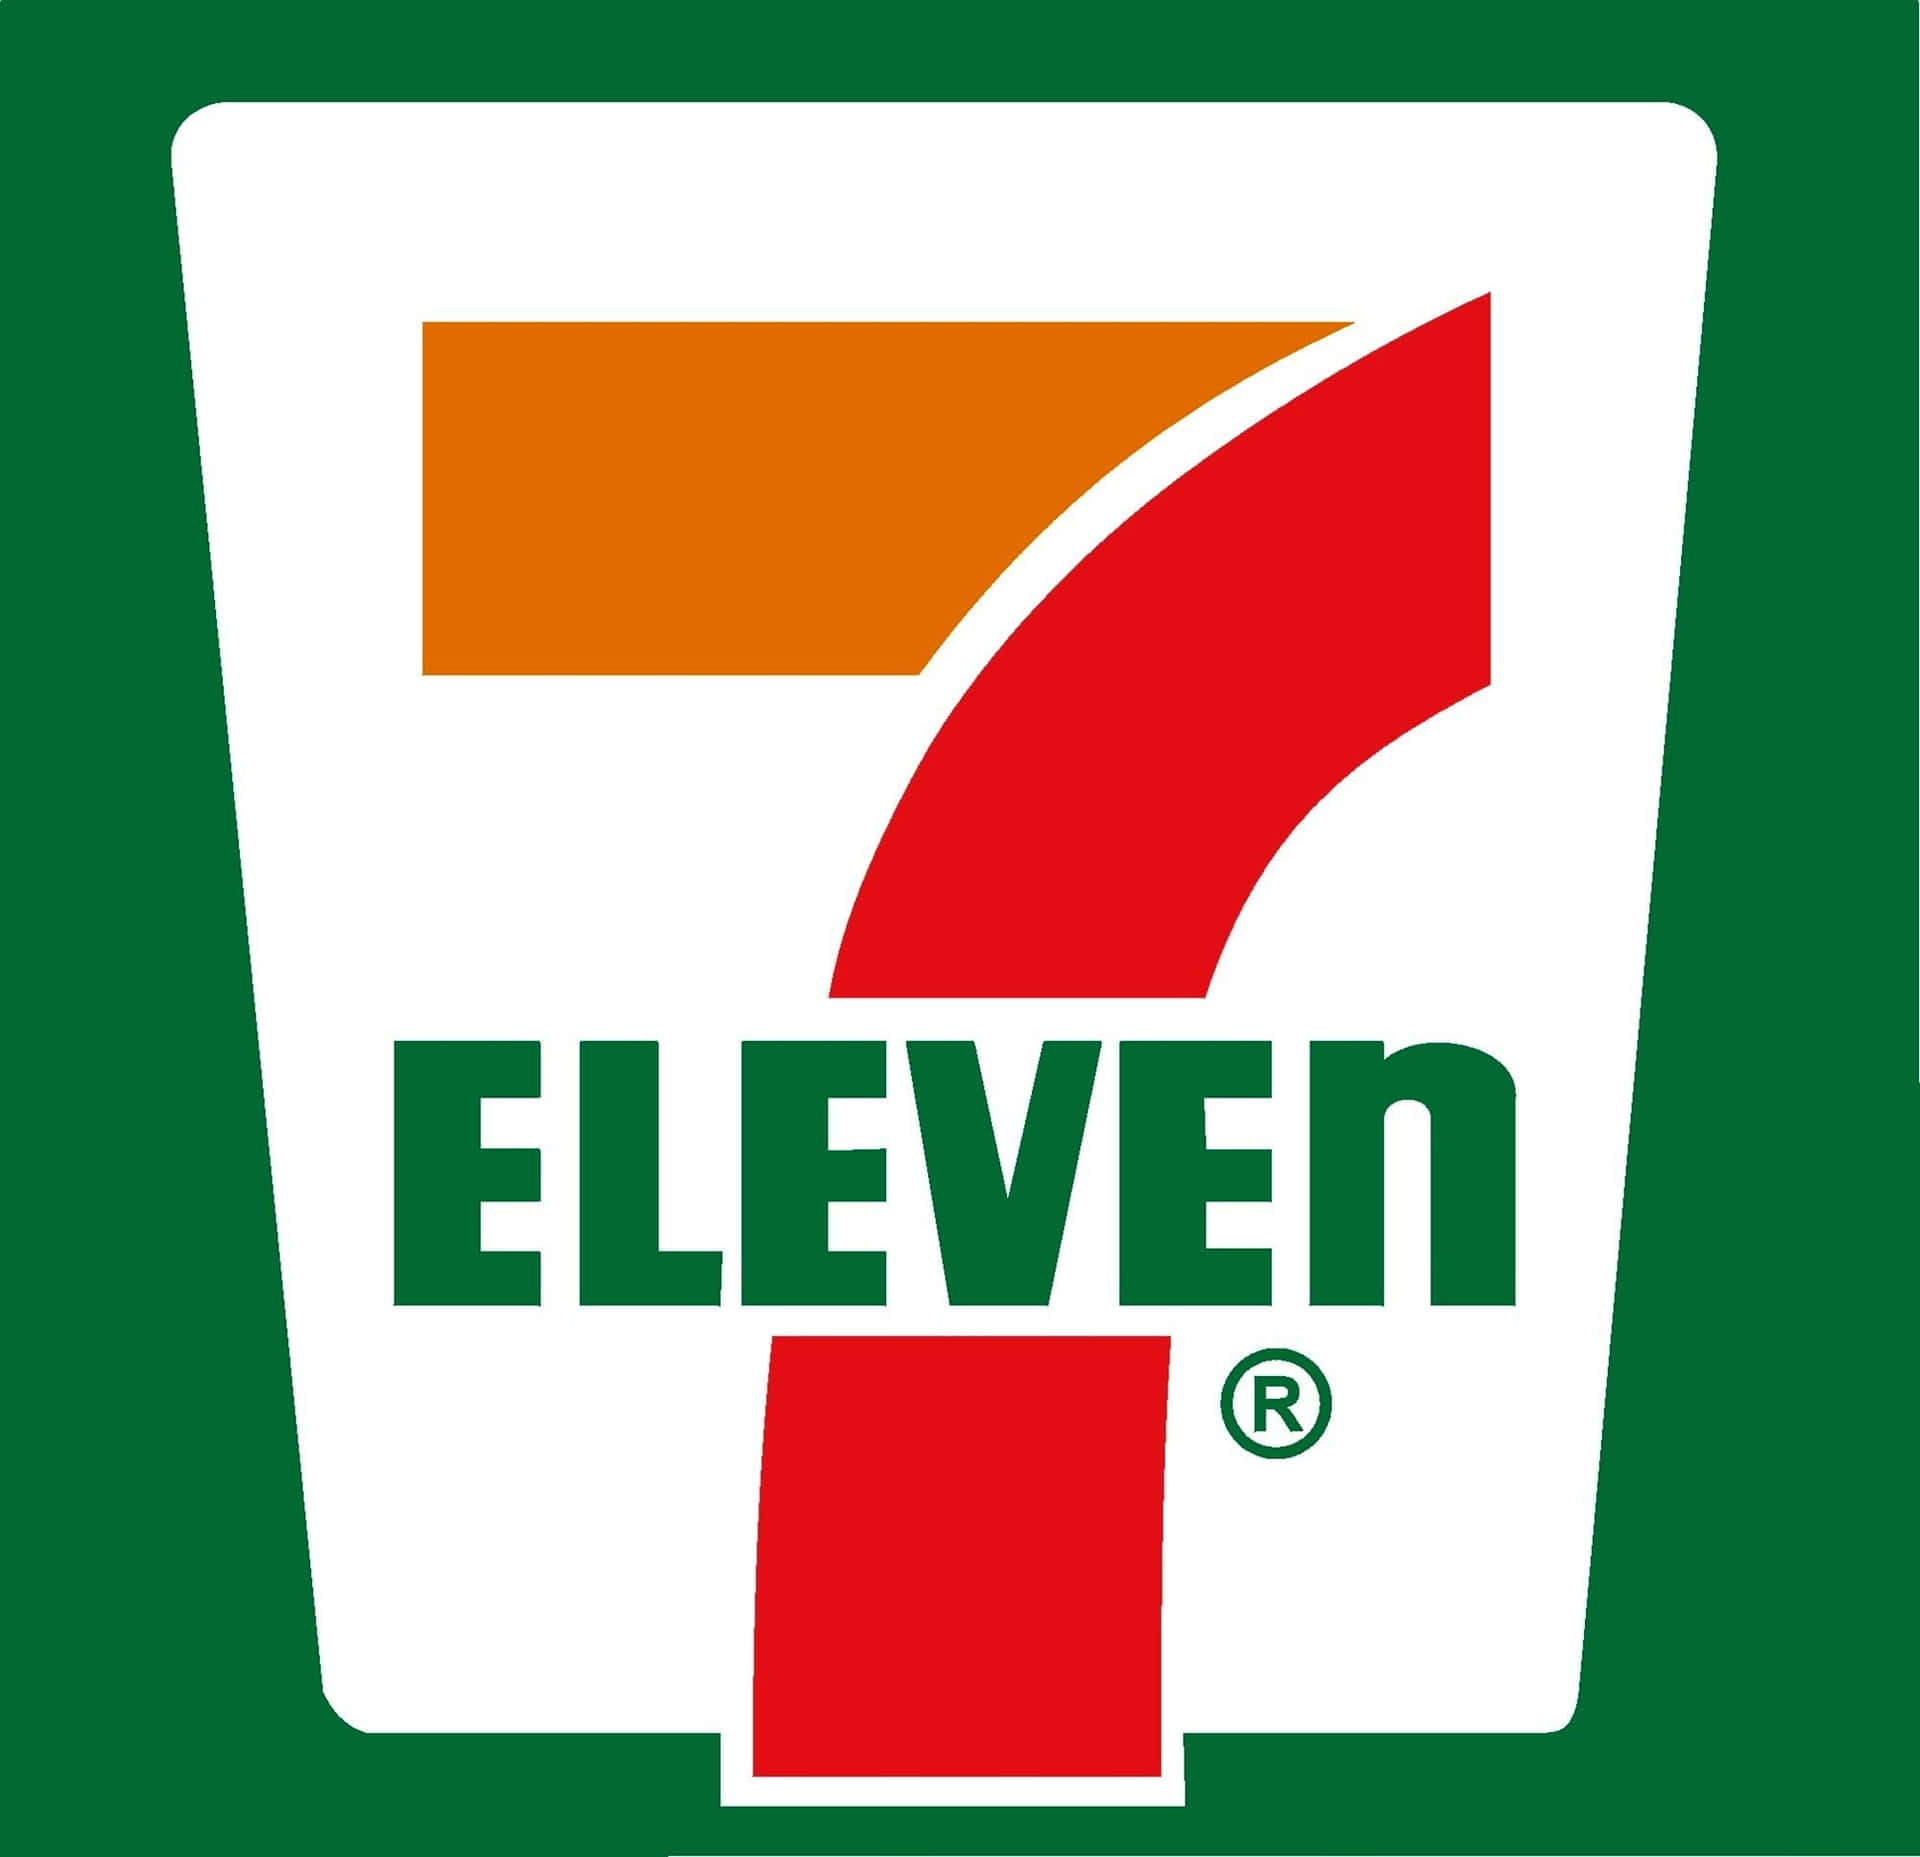 Seventy-one Logo On A Green Background